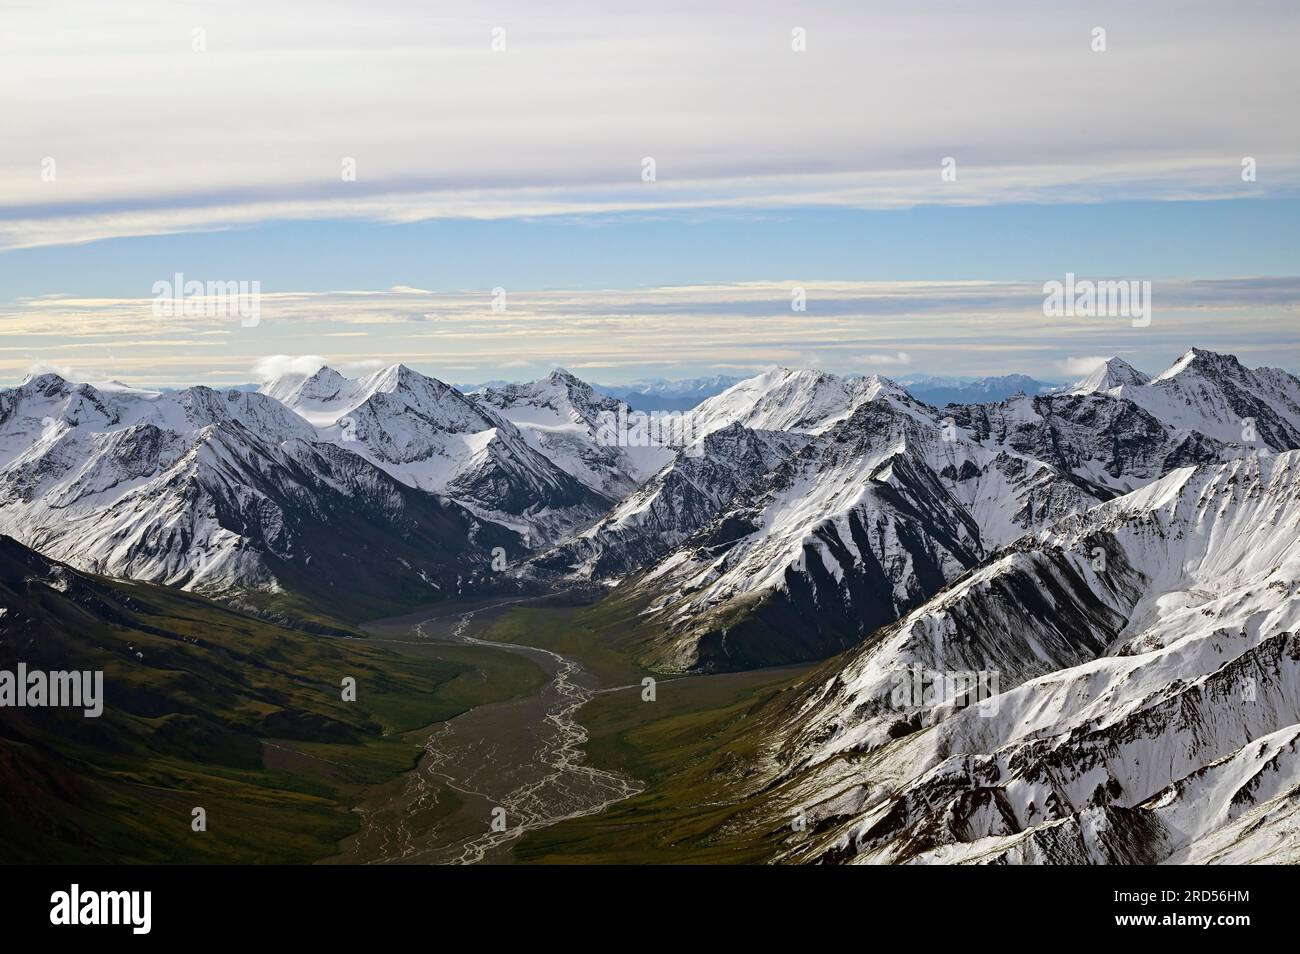 Vue aérienne de la chaîne de montagnes de l'Alaska avec Toklat River Valley, Alaska, USA Banque D'Images